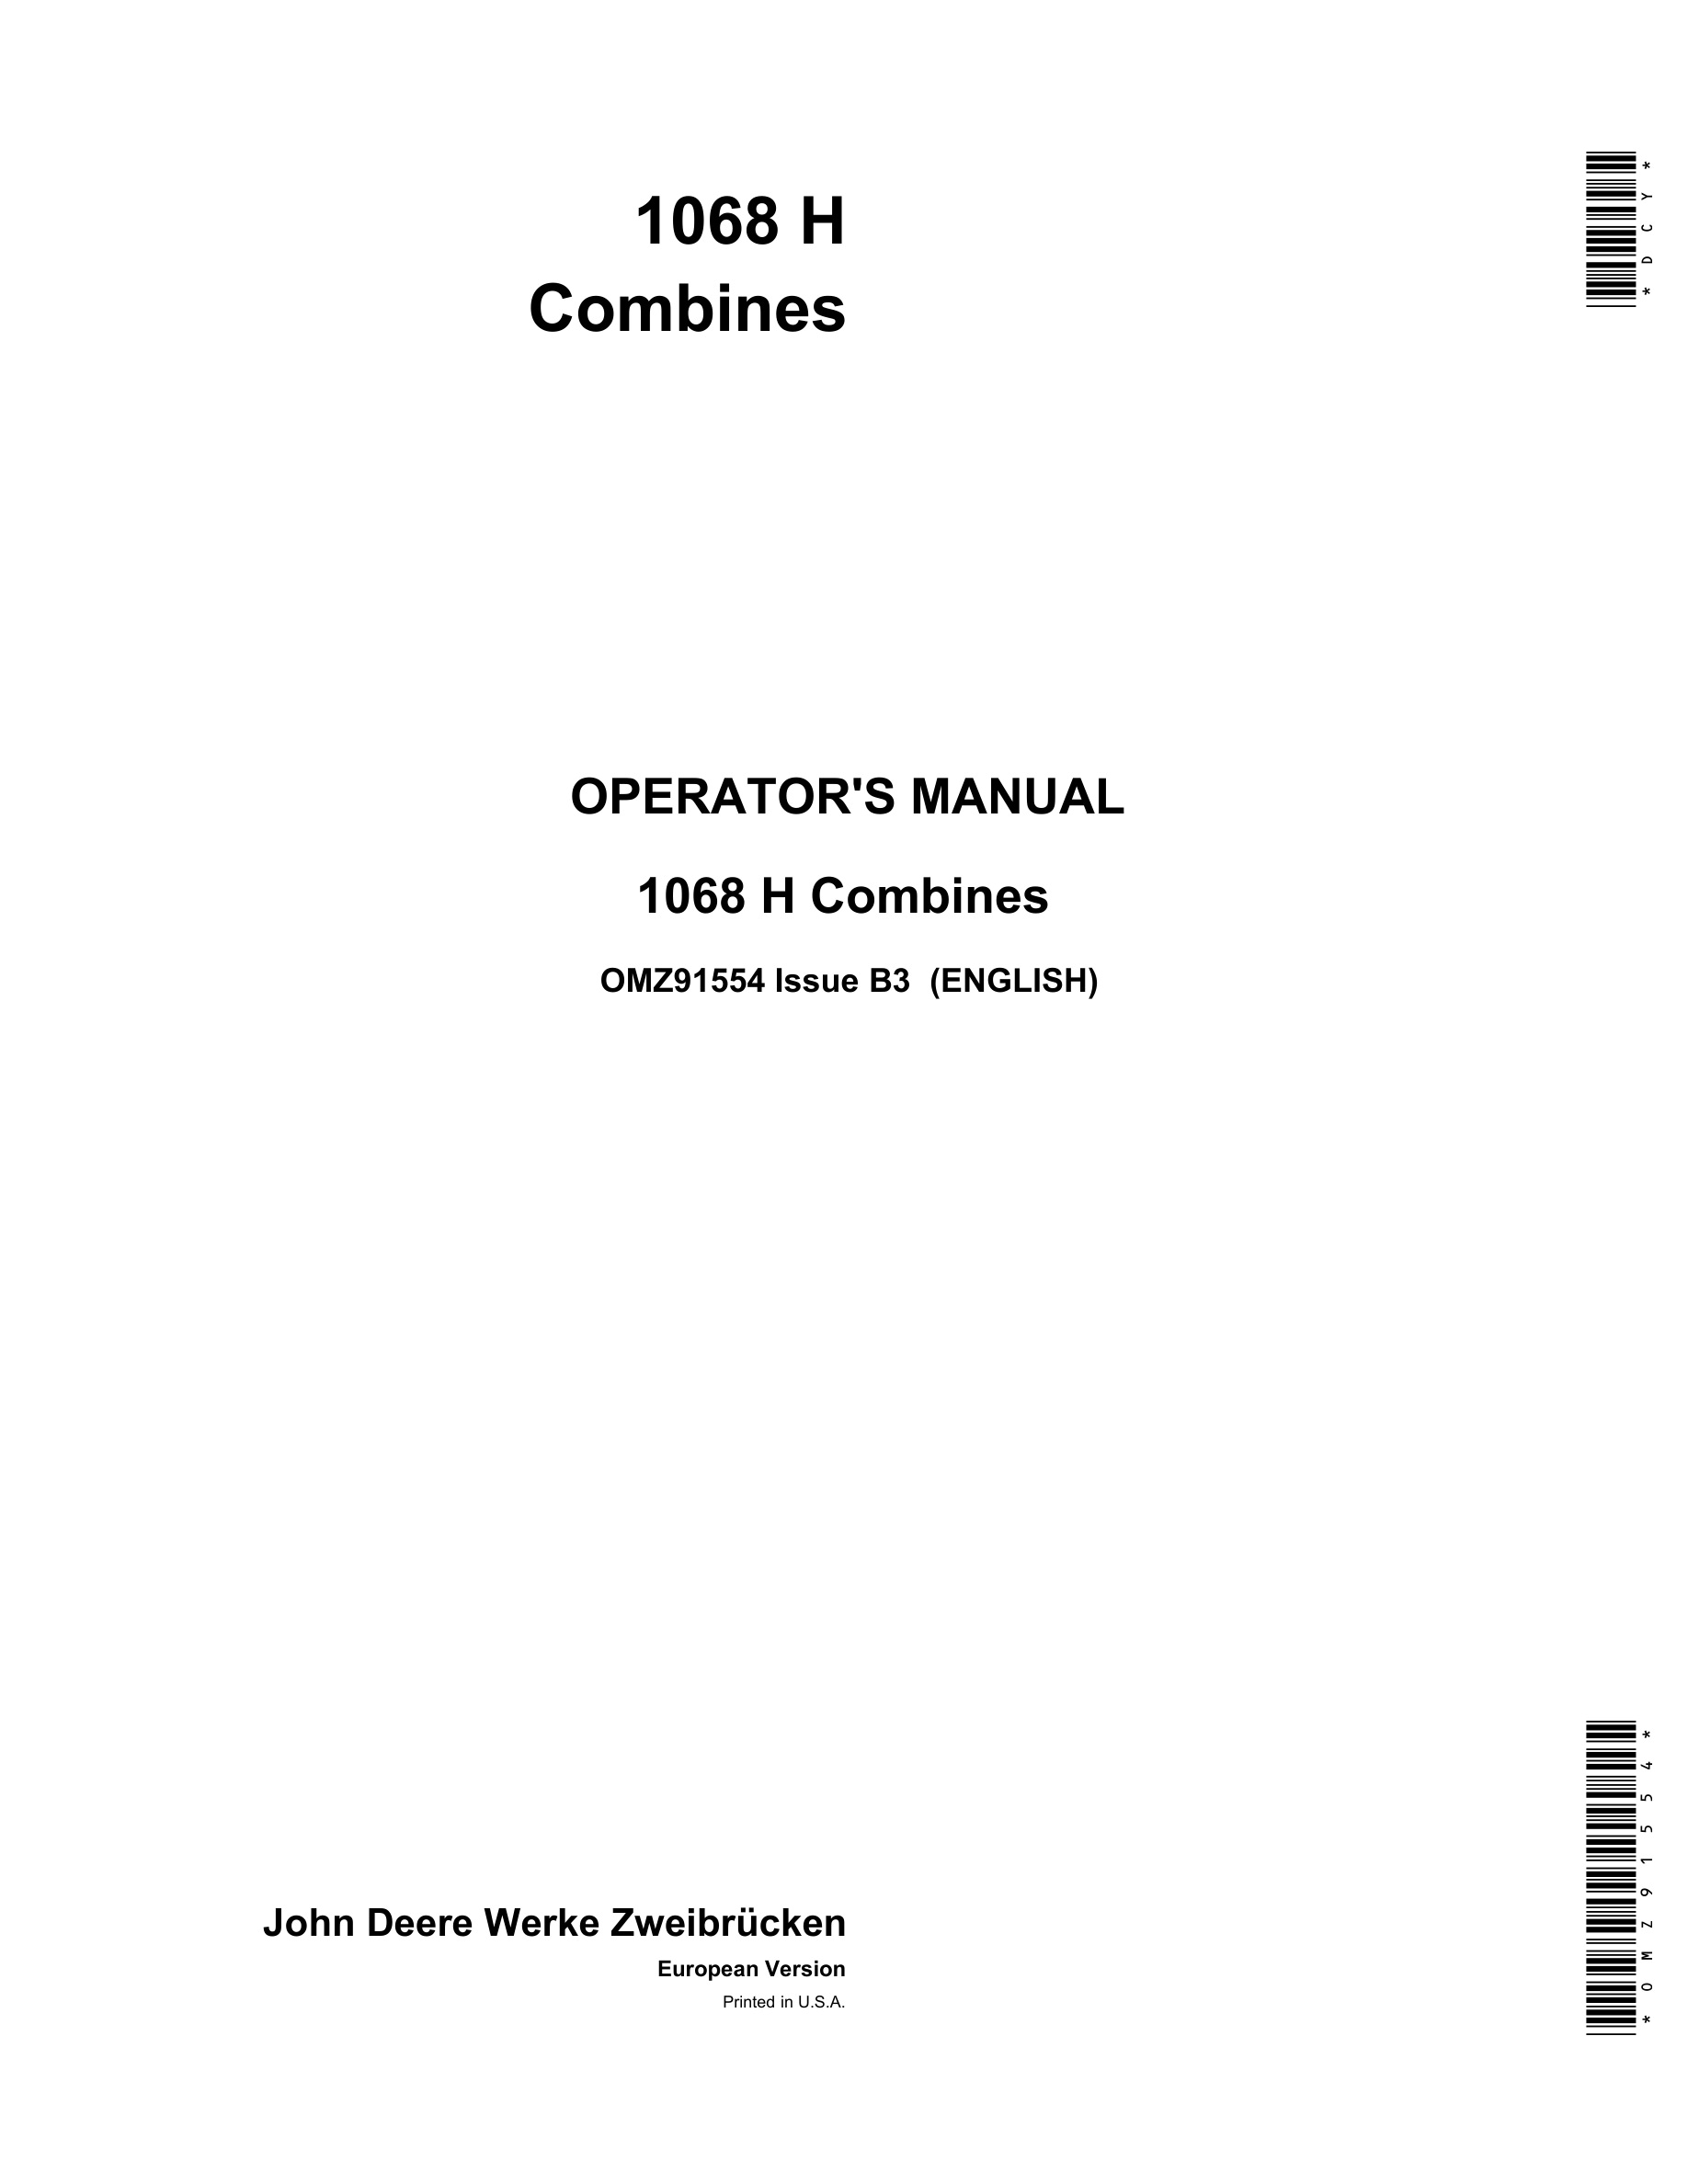 John Deere 1068 H Combine Operator Manual OMZ91554-1